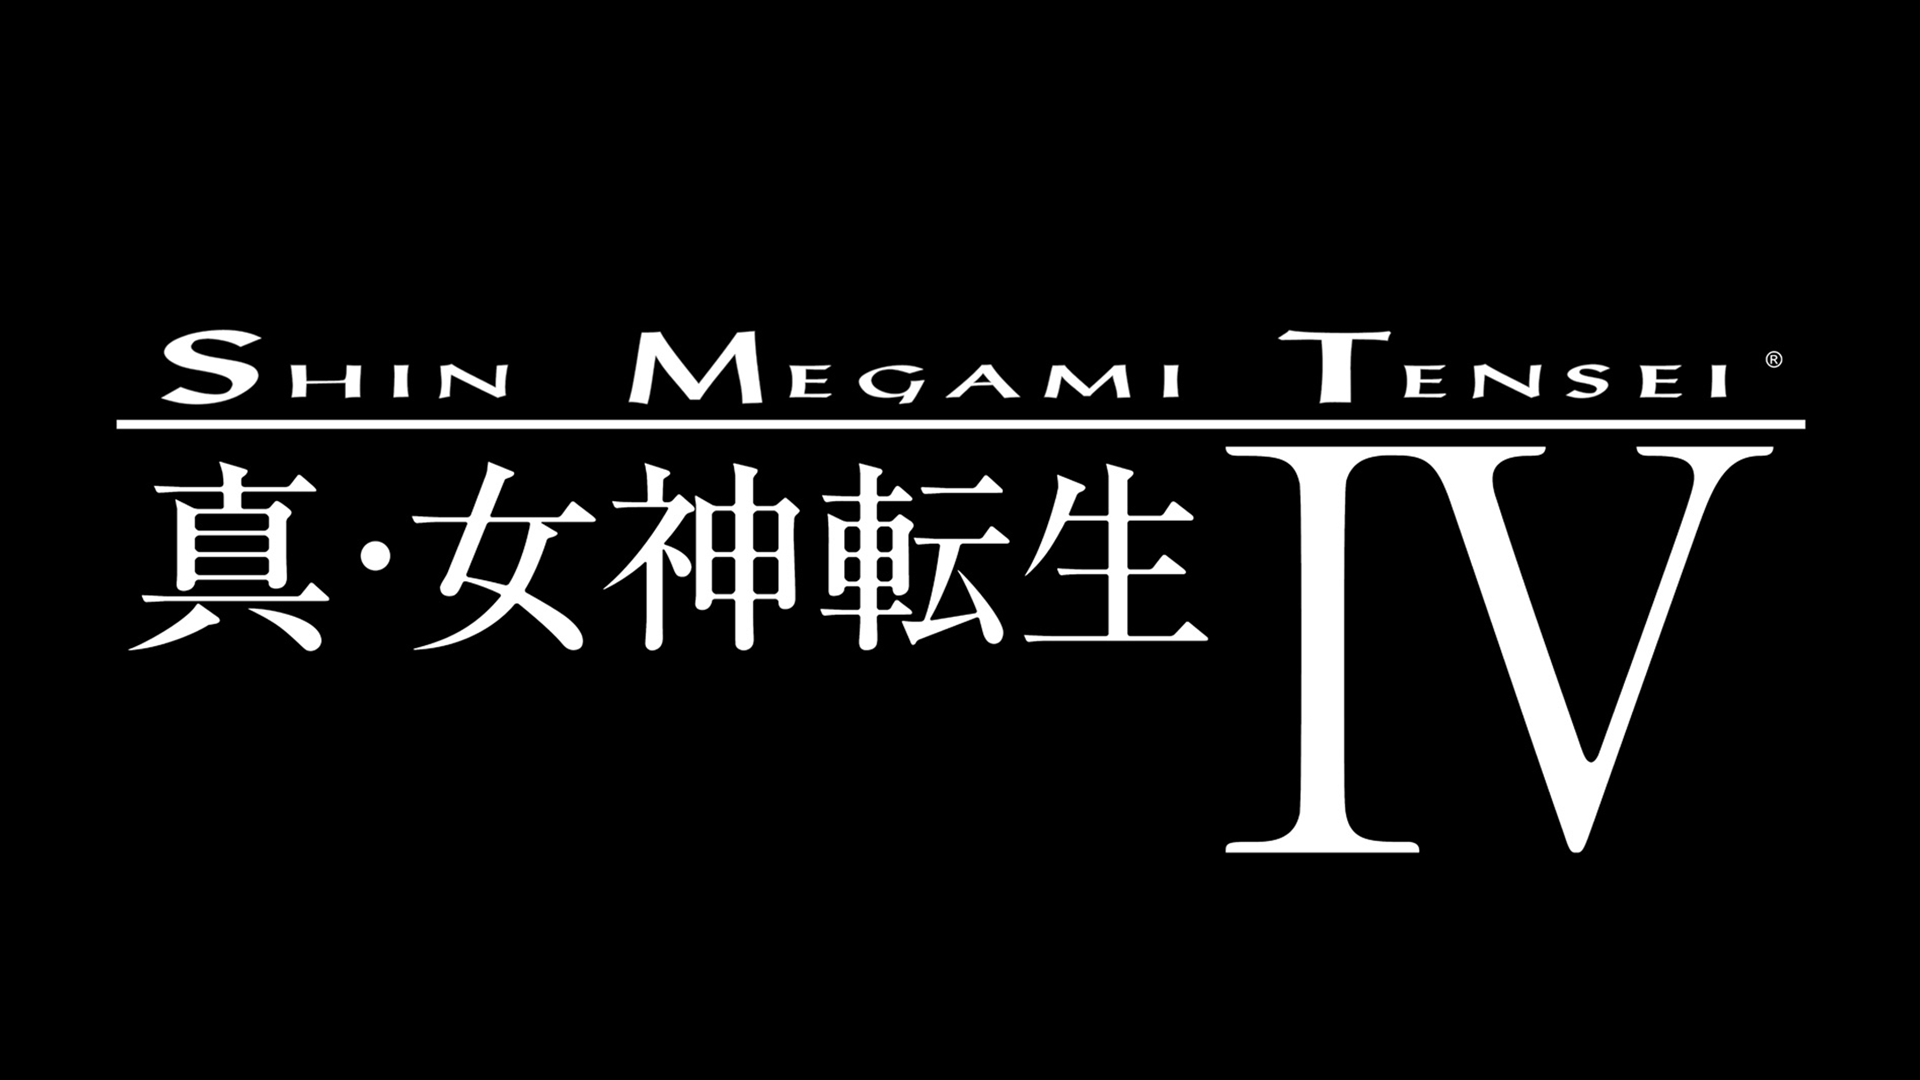 Shin Megami Tensei IV Logo